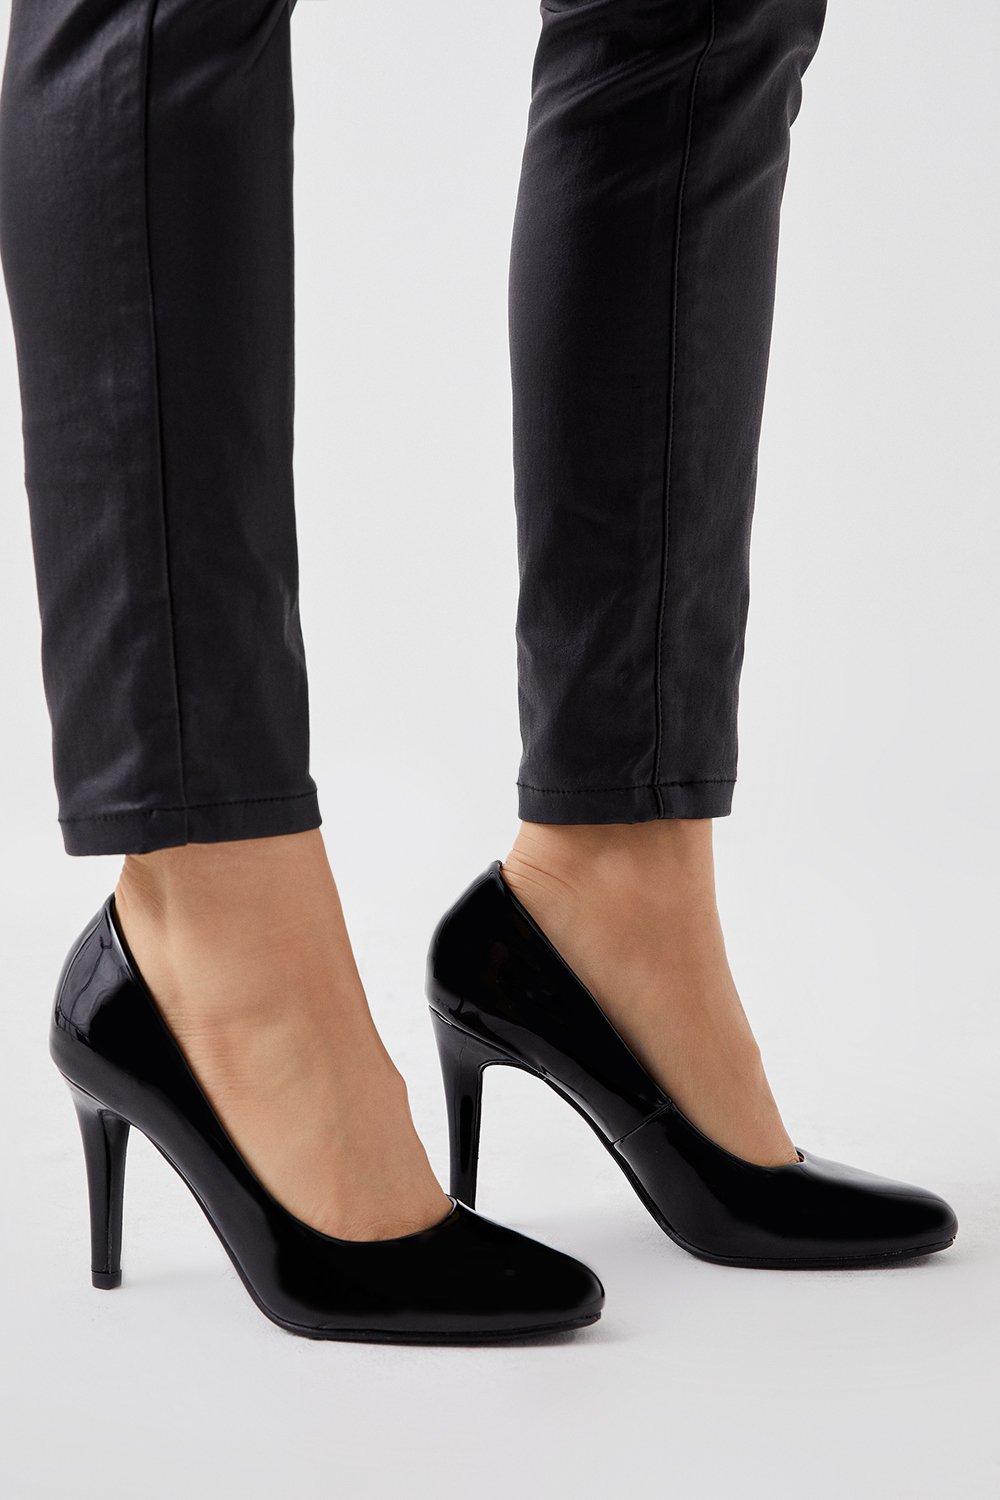 Women’s Dana Round Toe Stiletto Court Shoes - true black - 4